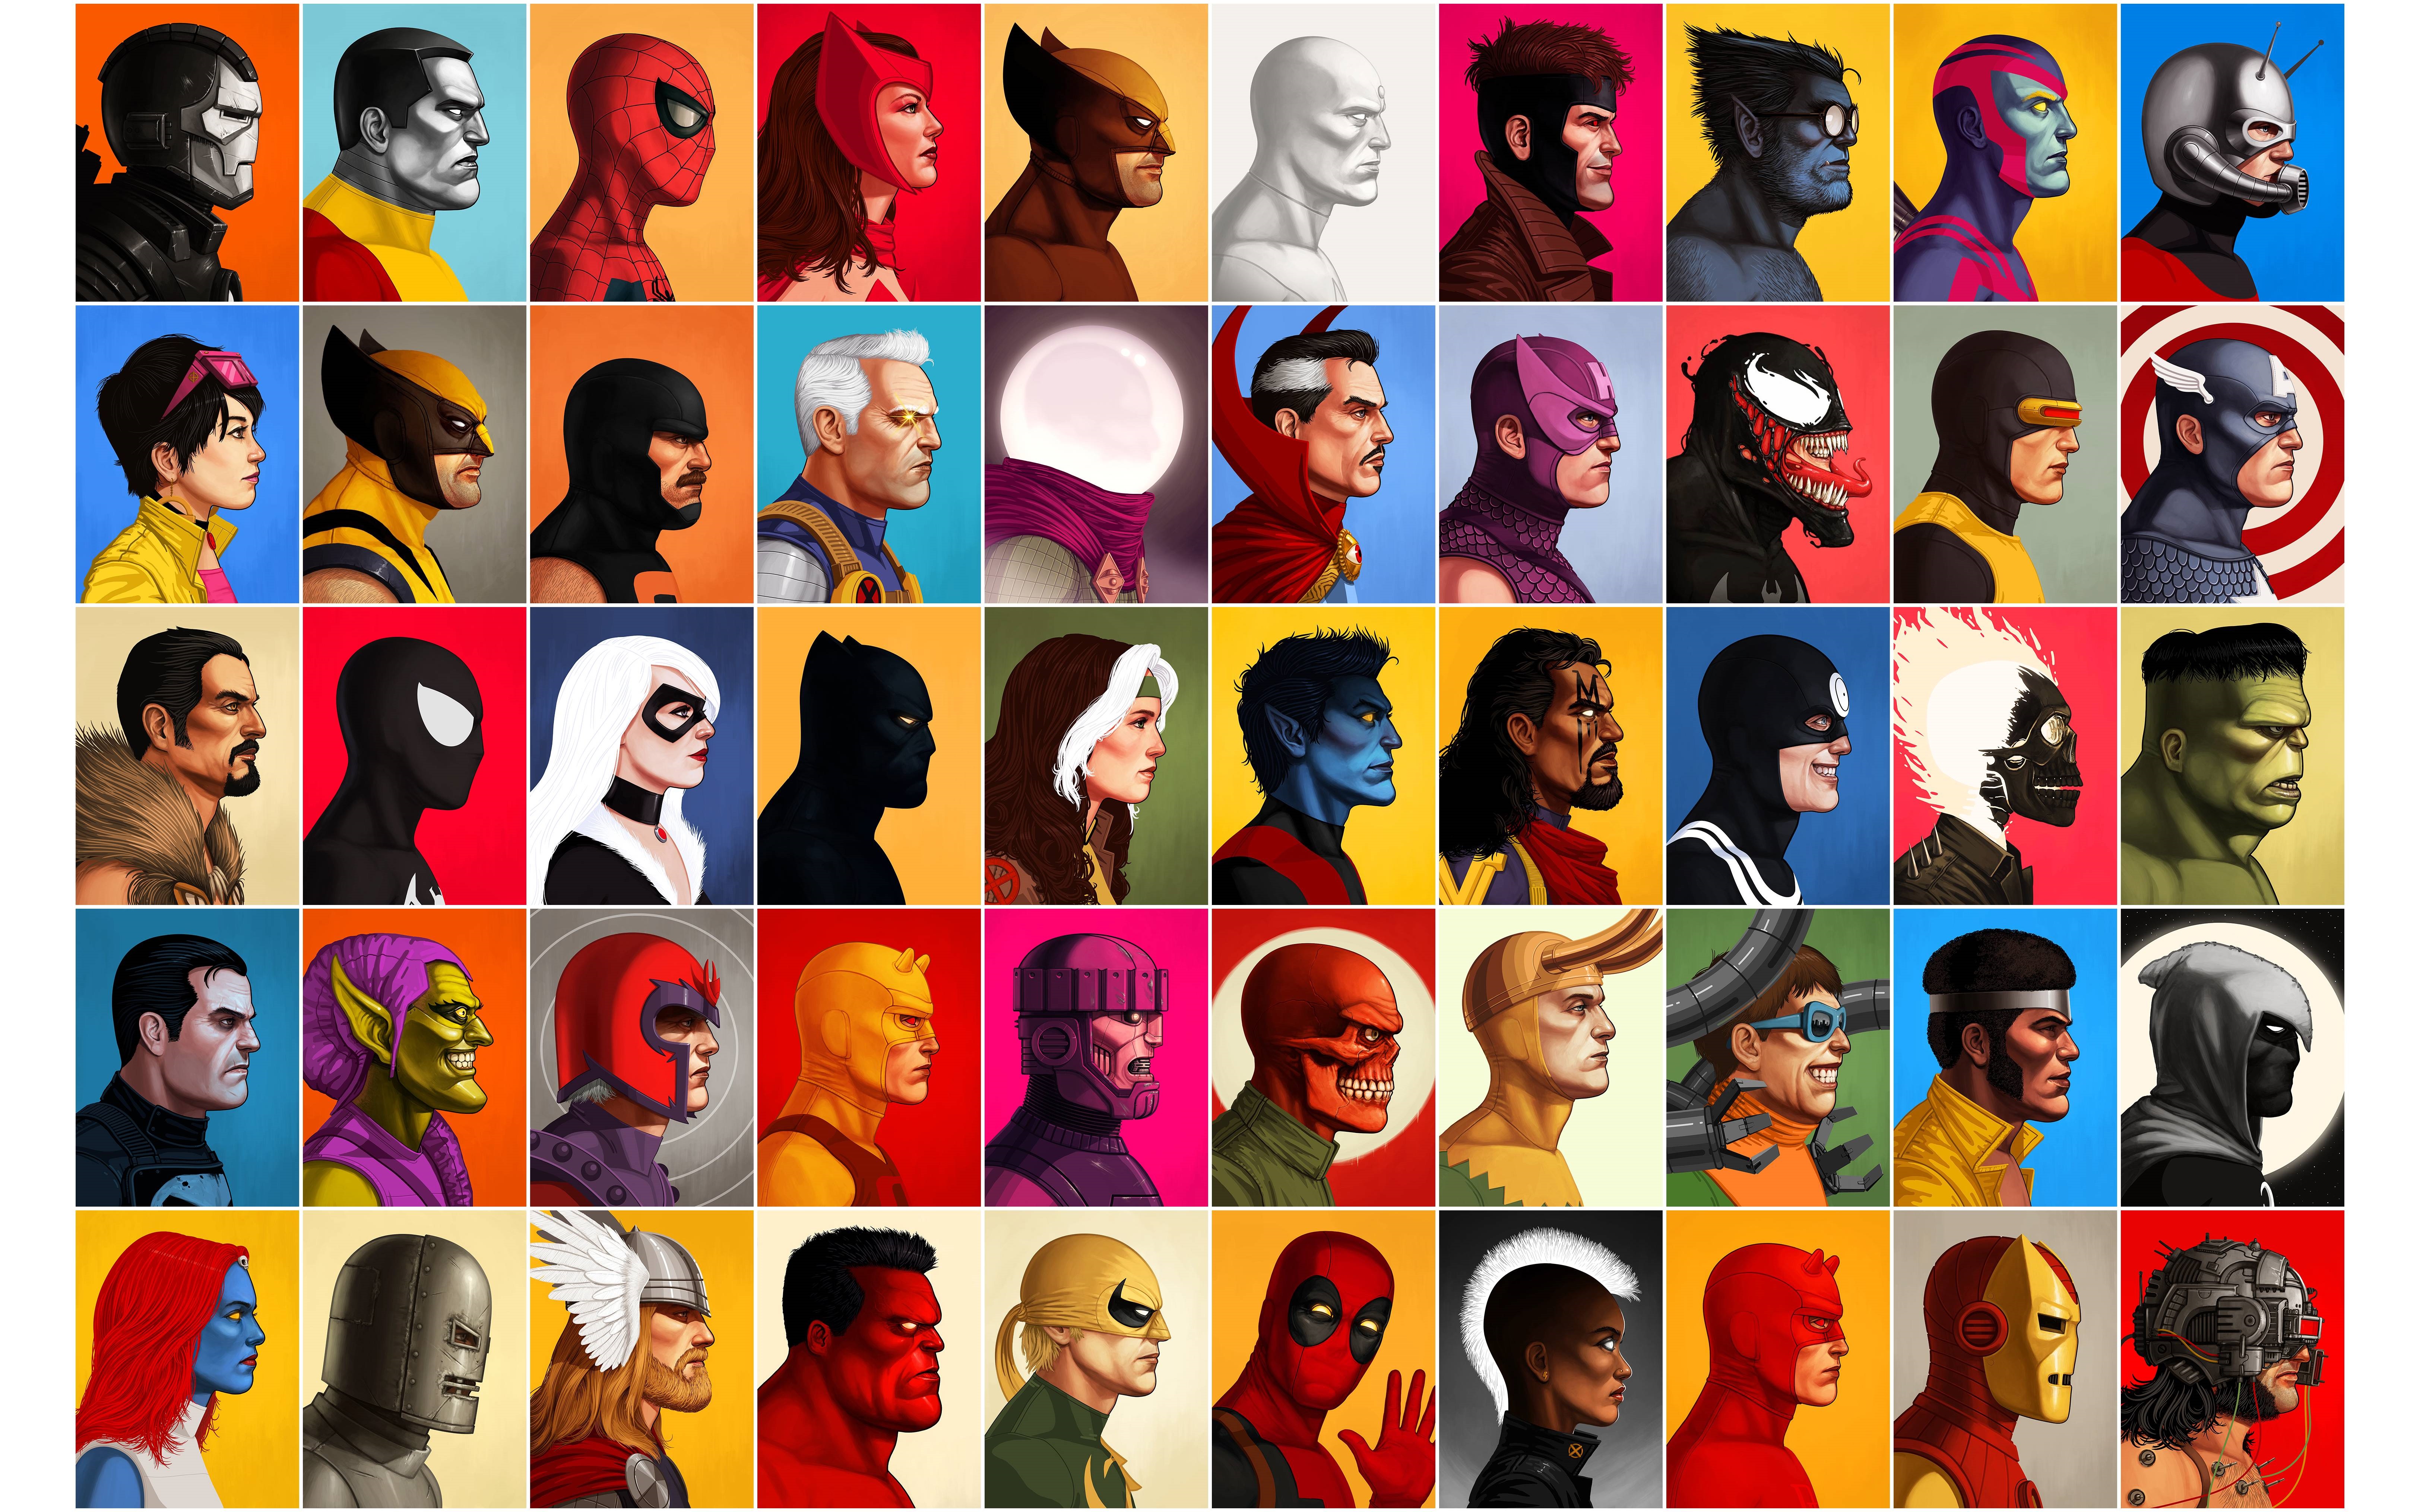 wallpapers deadpool, daredevil, spider man, hulk, bullseye (marvel comics), cable (marvel comics), puck (marvel comics), wolverine, collage, archangel (marvel comics), loki (marvel comics), scarlet witch, black panther (marvel comics), comics, ant man, beast (marvel comics), black cat (marvel comics), captain america, clint barton, colossus, cyclops (marvel comics), doctor octopus, doctor strange, galactus, gambit (marvel comics), green goblin, hawkeye, iron fist (marvel comics), iron man, jubilee (marvel comics), magneto (marvel comics), moon knight, mystique (marvel comics), nightcrawler (marvel comics), punisher, red hulk, red skull (marvel comics), rogue (marvel comics), silver surfer, storm (marvel comics), thor, venom, war machine, weapon x (marvel comics)